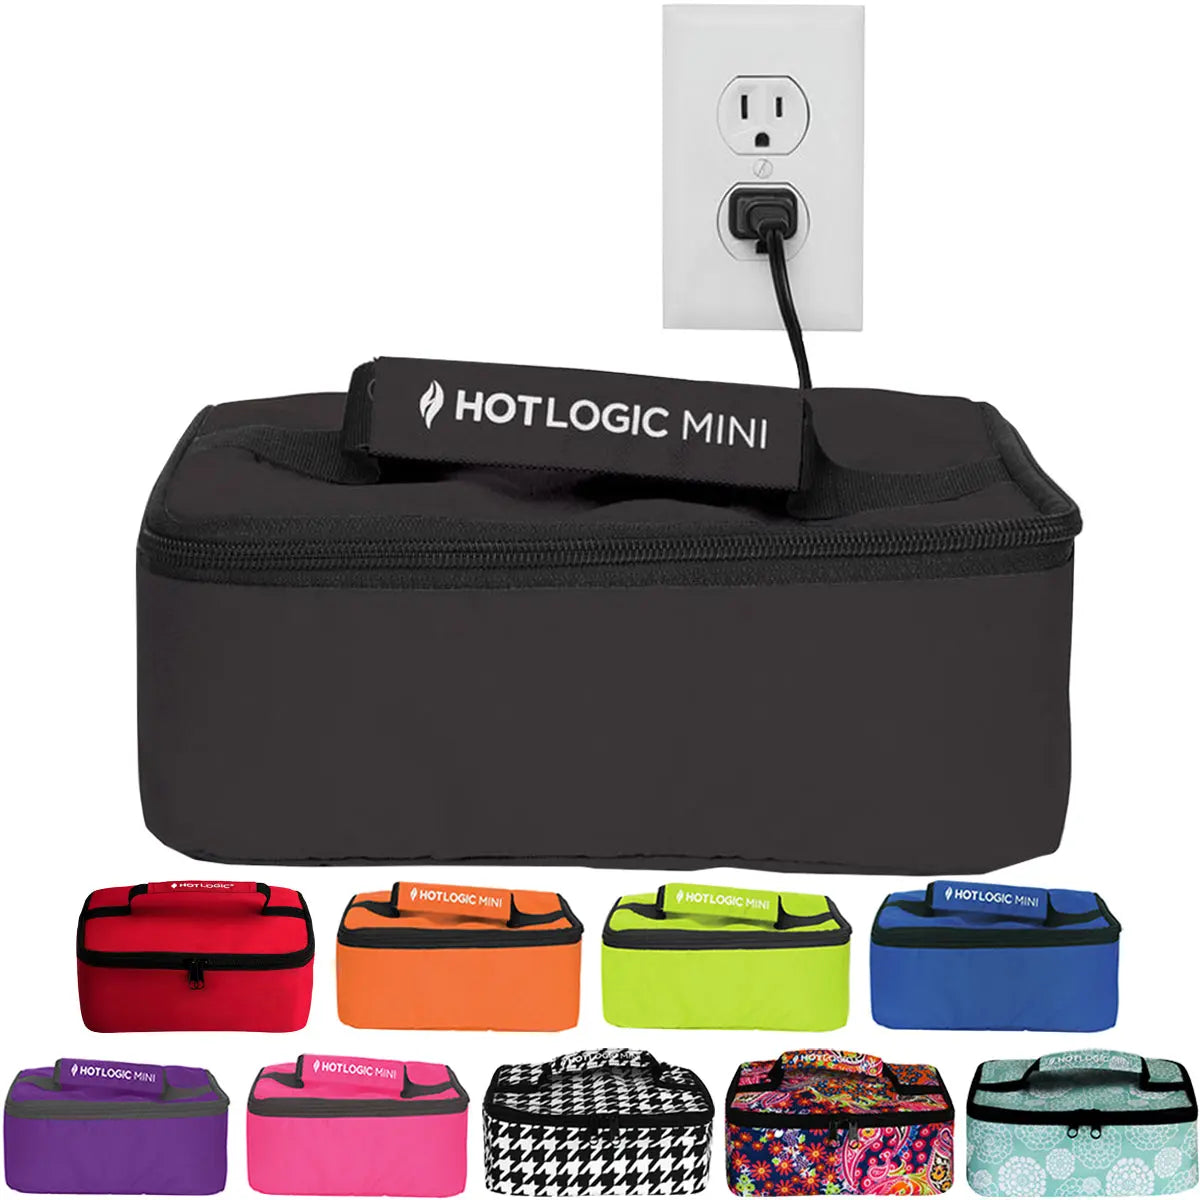 Hot Logic Mini Personal Portable Oven Hot Logic